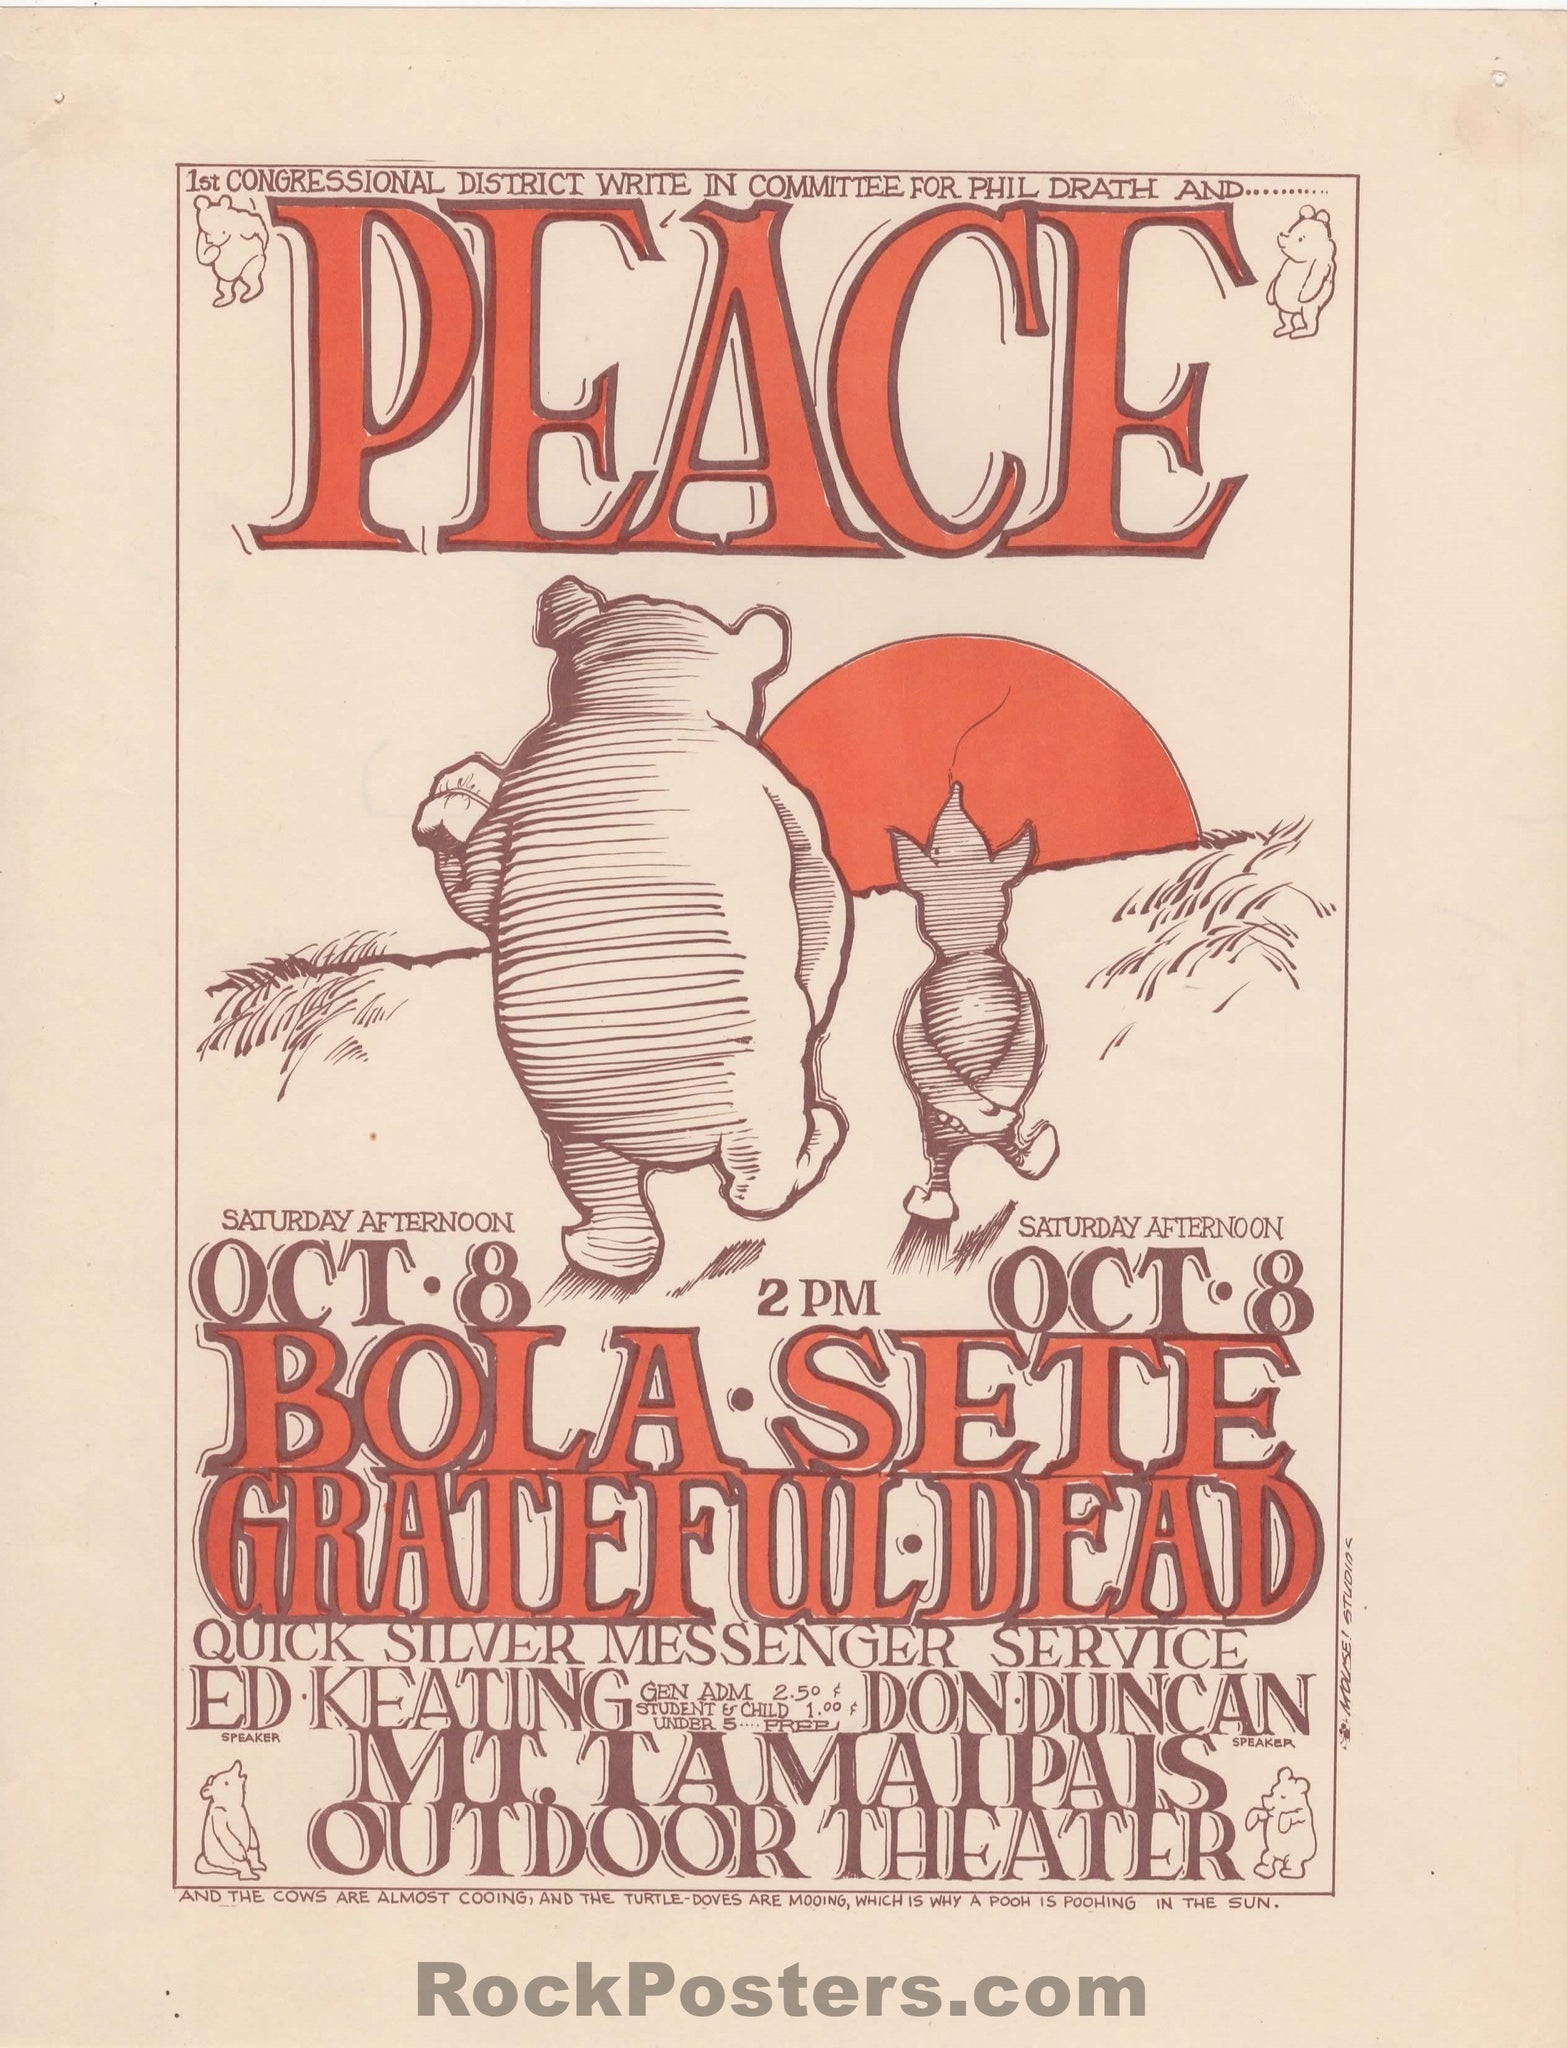 AUCTION - AOR 2.326 - Grateful Dead Bola Sete - 1966 Handbill - Mt. Tamalpais Amphitheater - Very Good